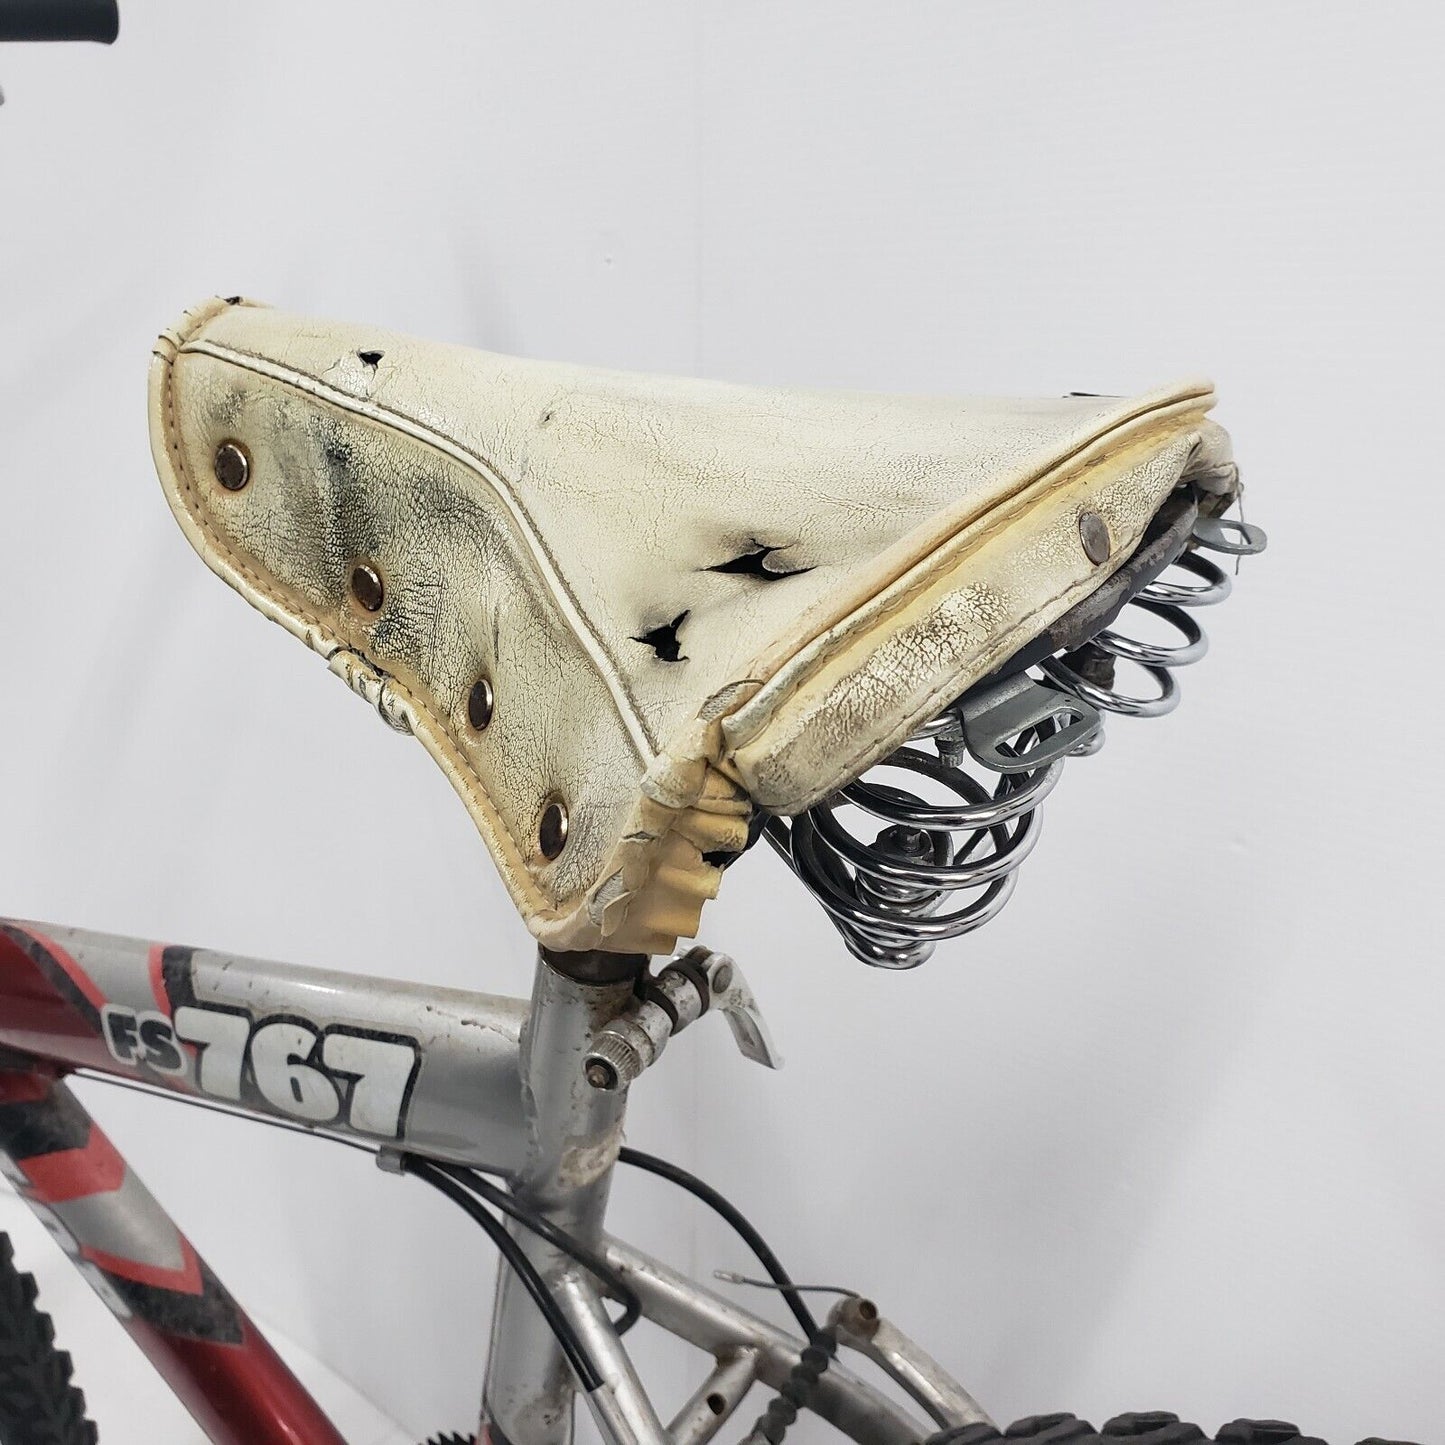 (11765-1) Dunlop FS767 Mountain Bike